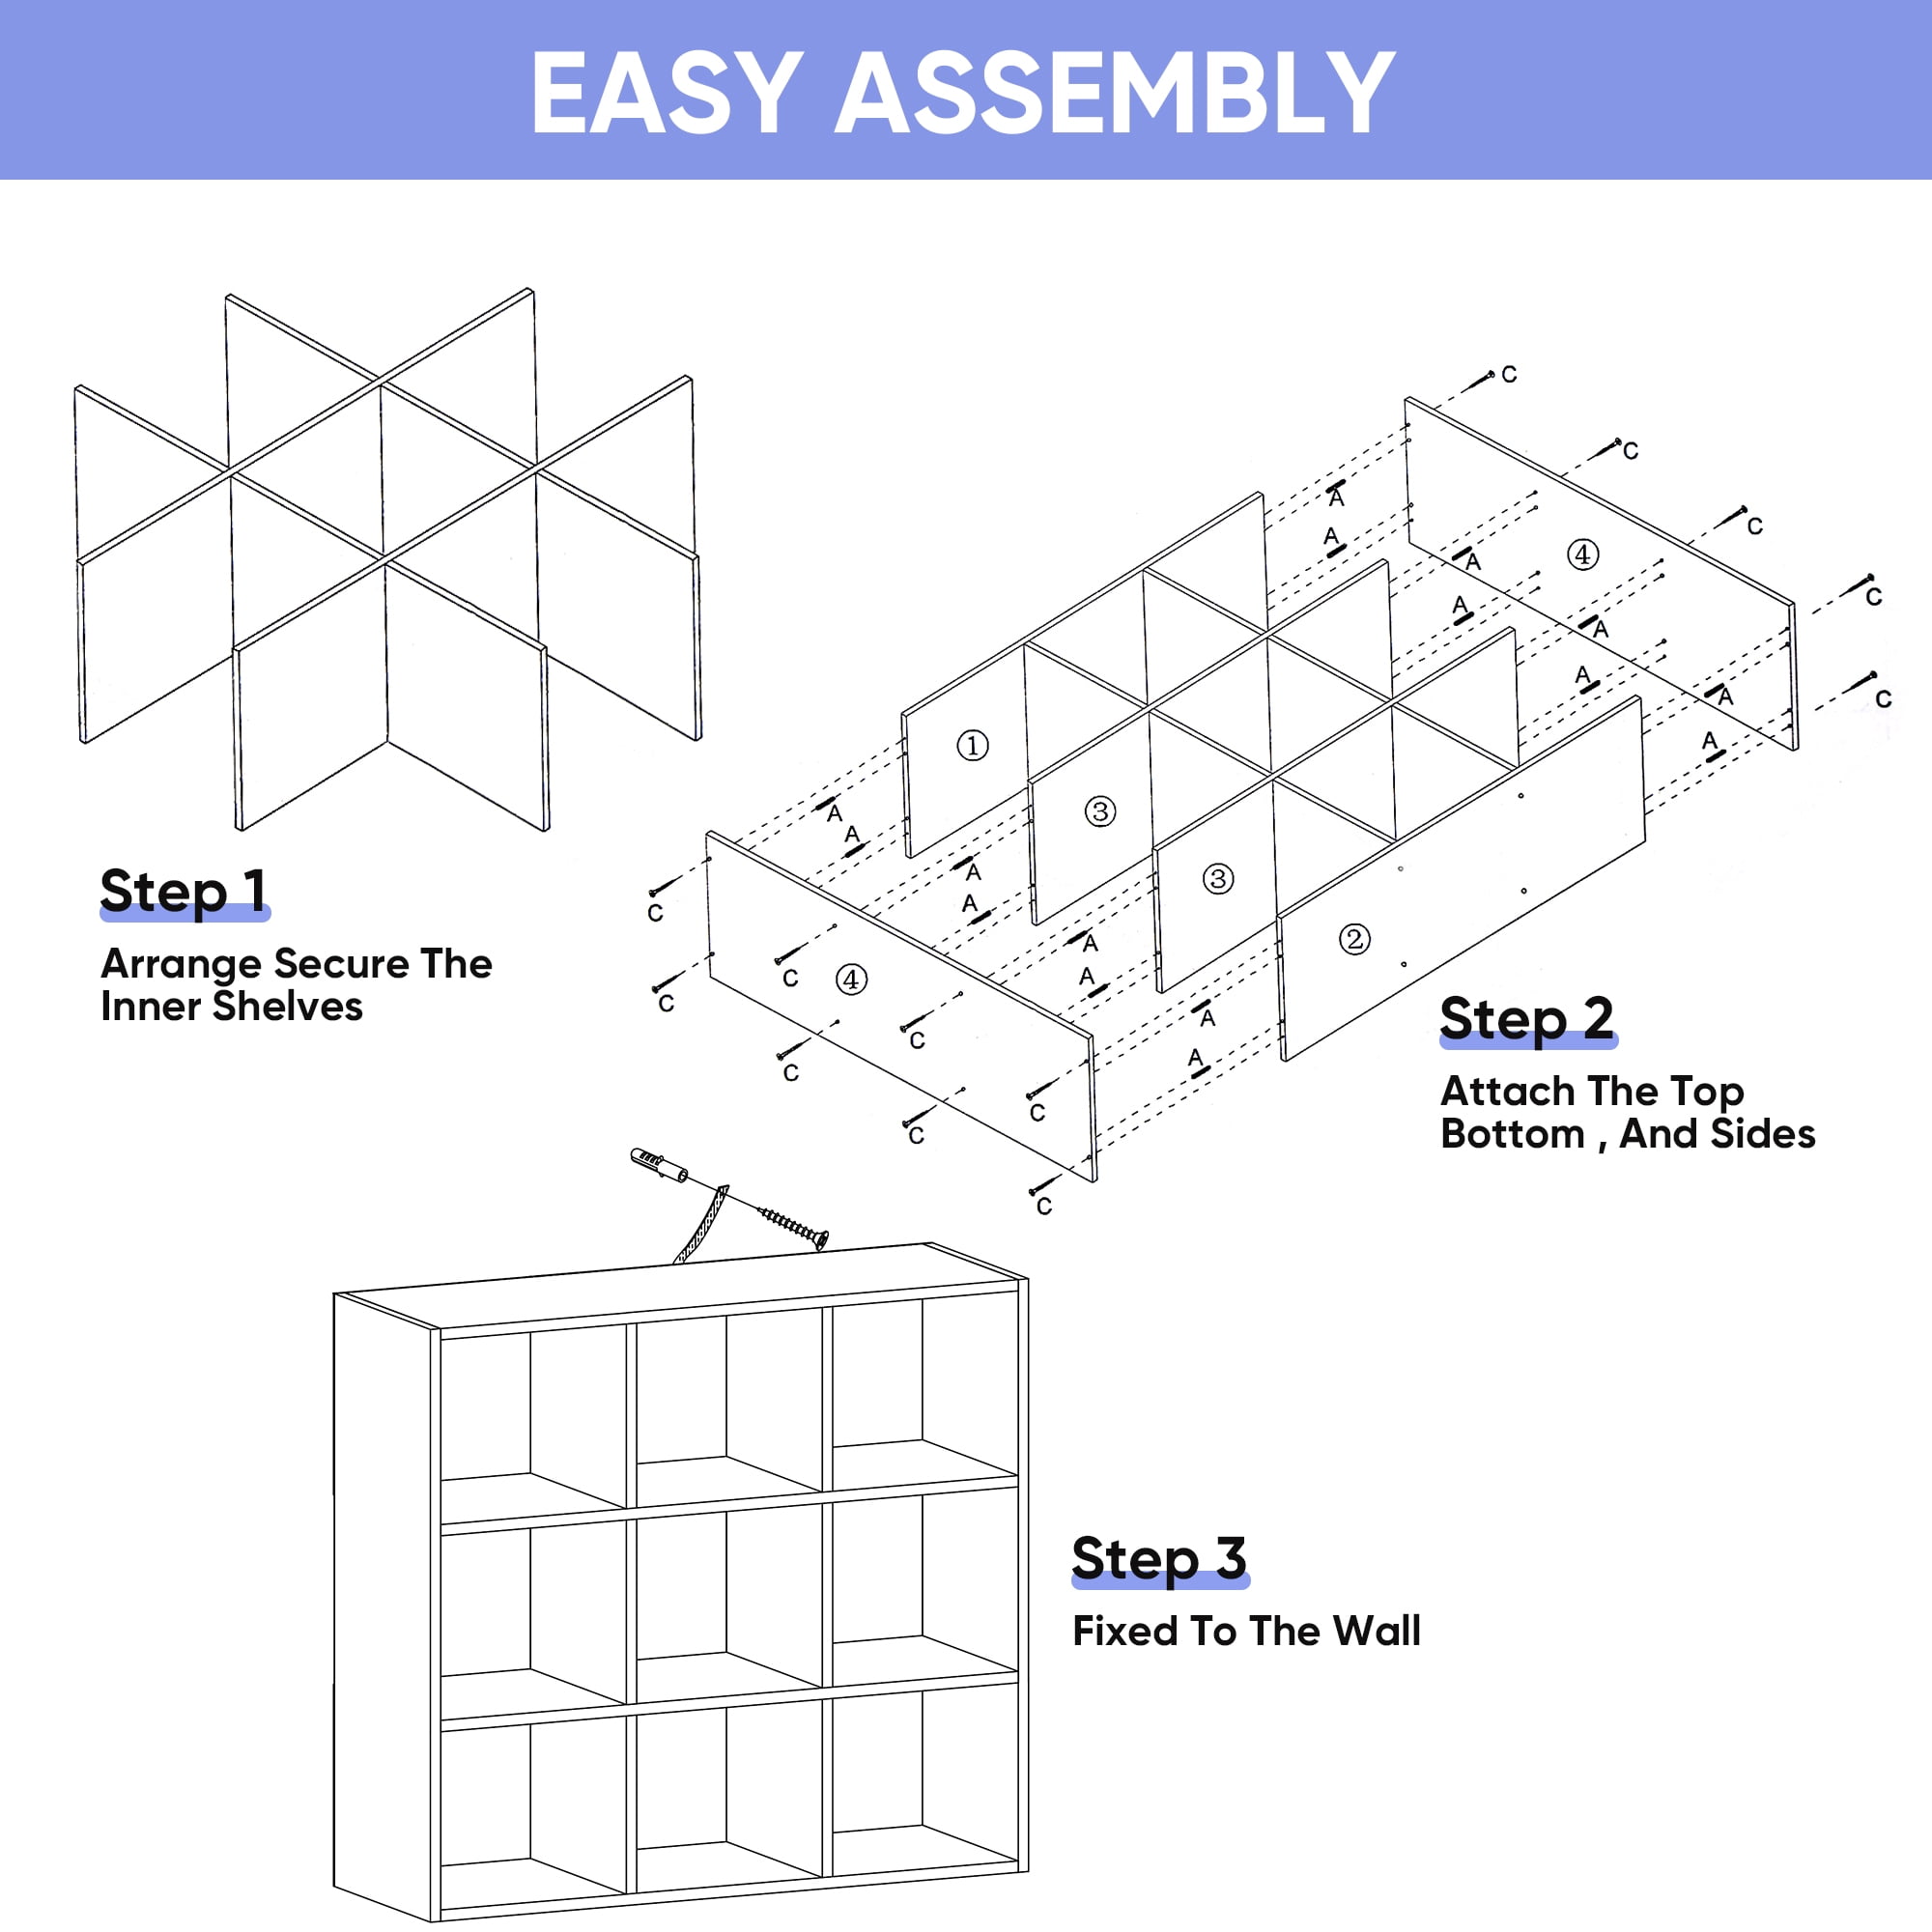 ZenStyle 9 Cube Storage Shelf Organizer, Wooden Bookshelf System Display  Cube Shelves Compartments, Customizable W/ 5 Removable Back Panels (Dark